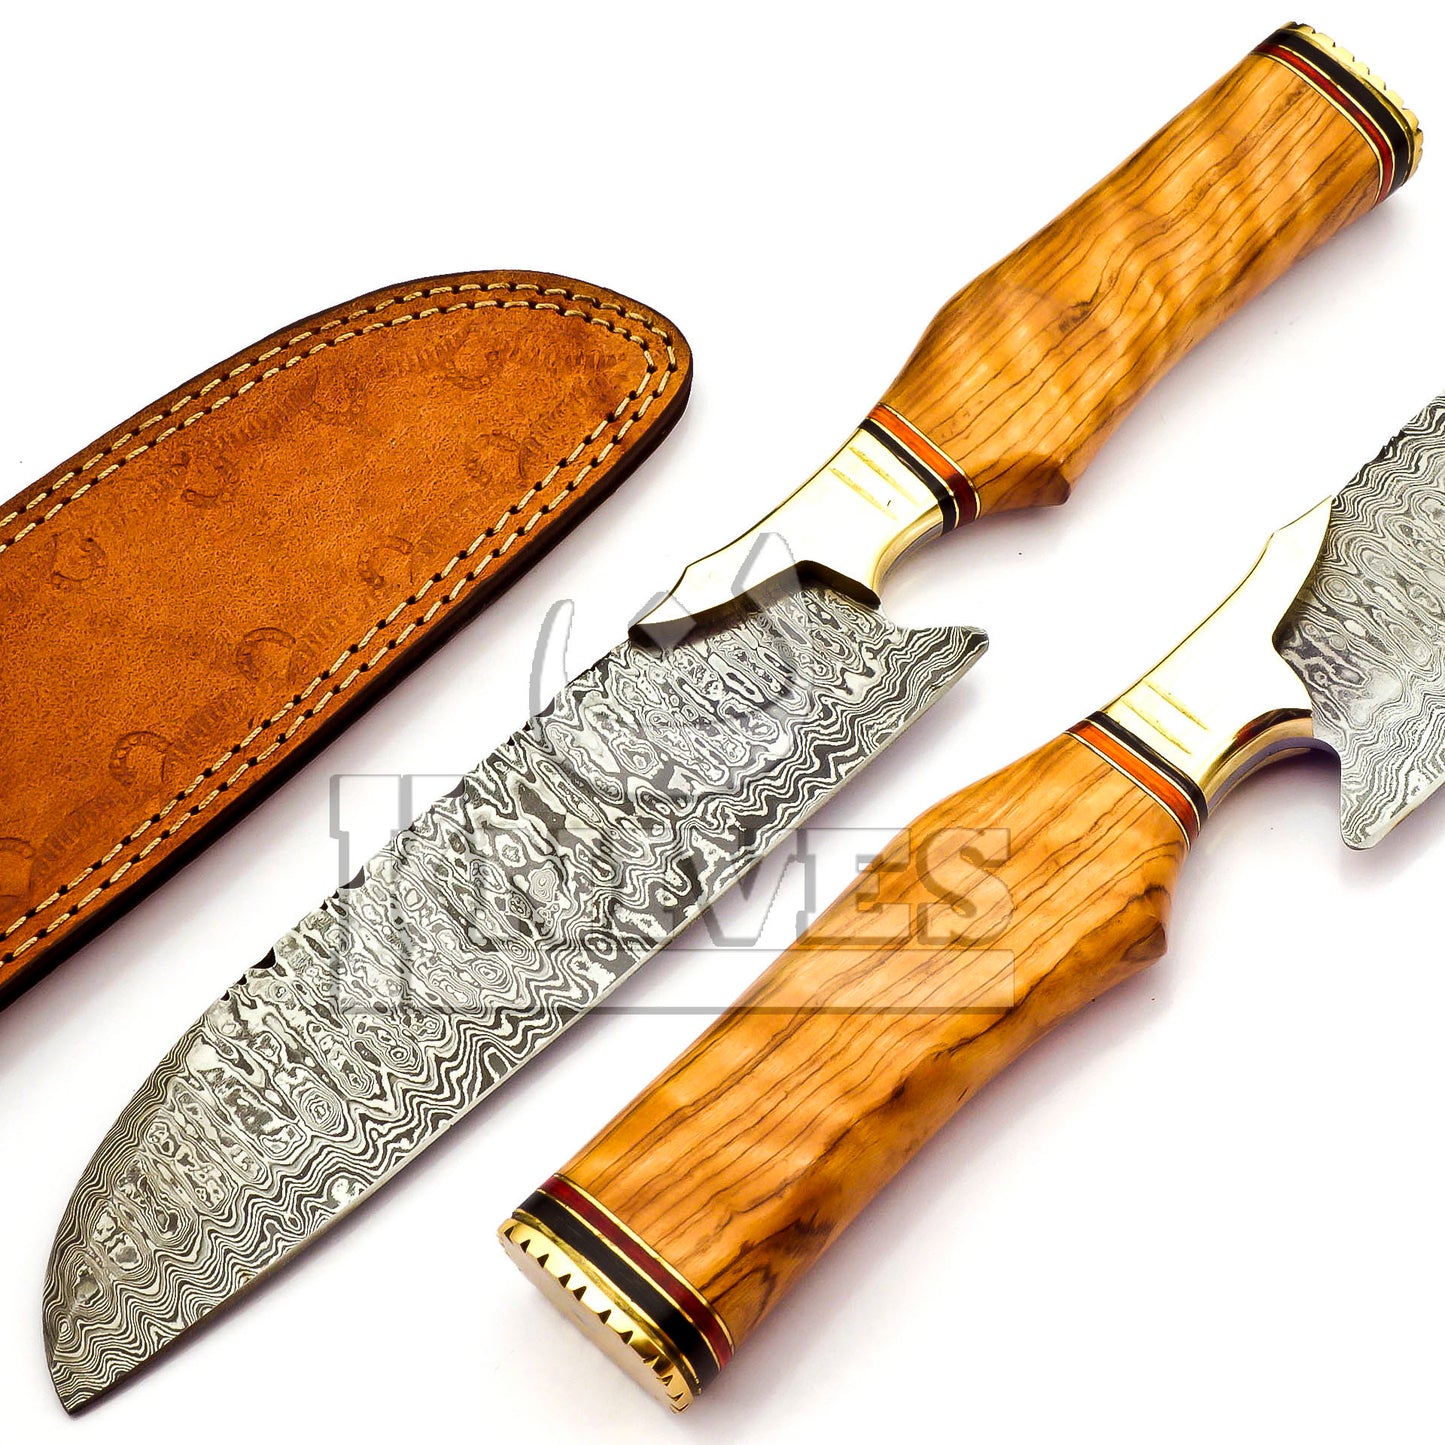 Handmade Damascus steel chef knife olive wood handle & leather sheath